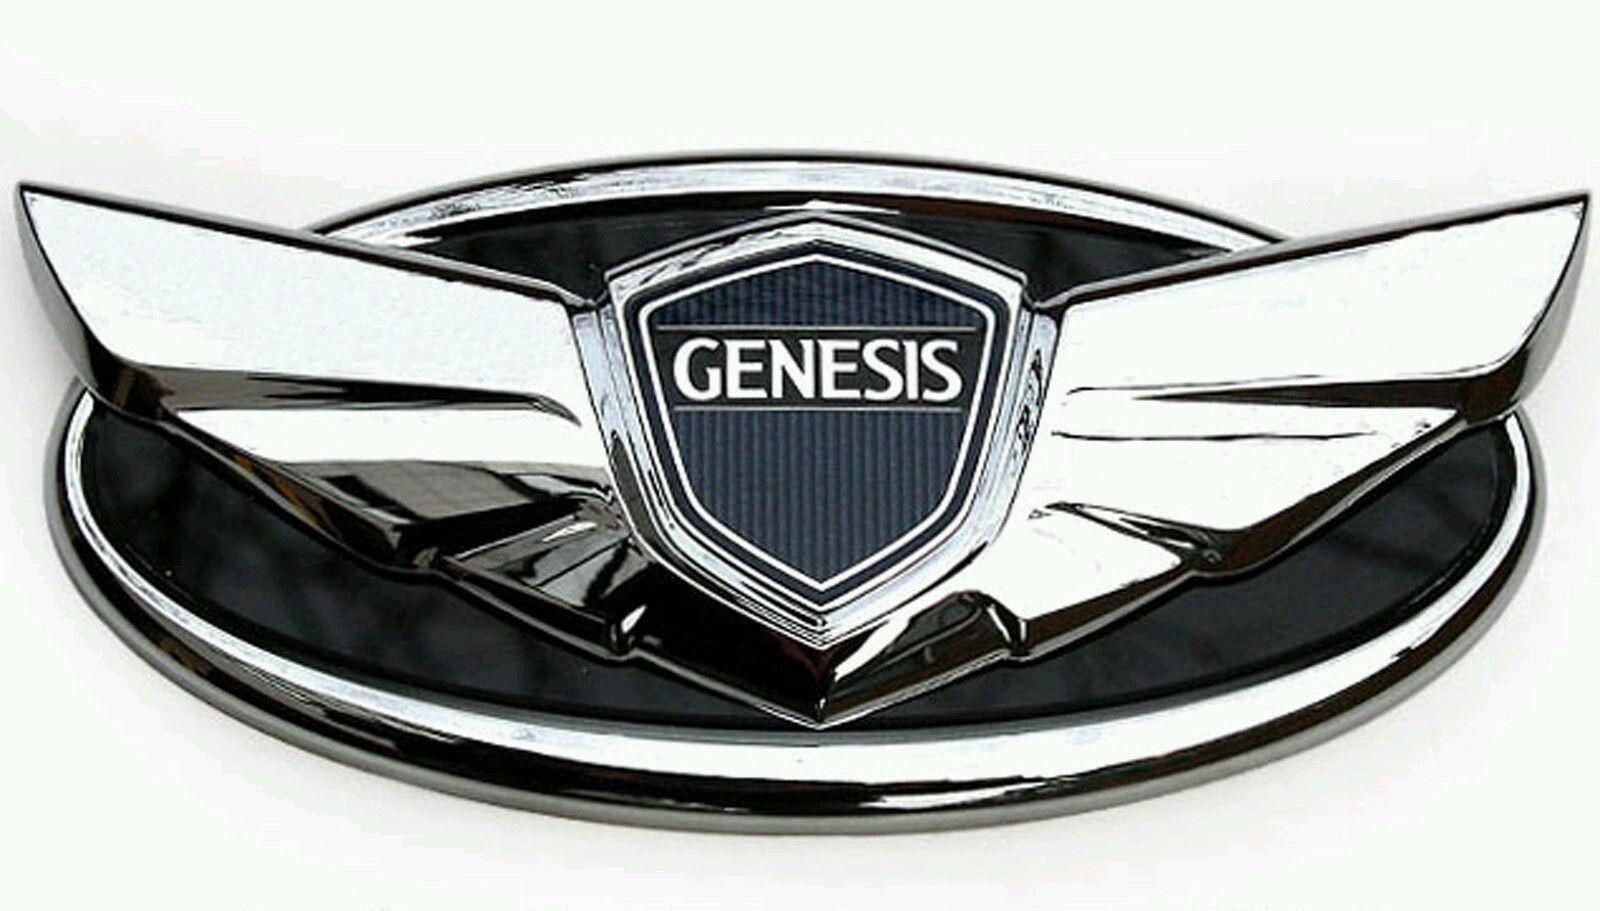 Genesis Medical Supply Logo PNG Transparent & SVG Vector - Freebie Supply